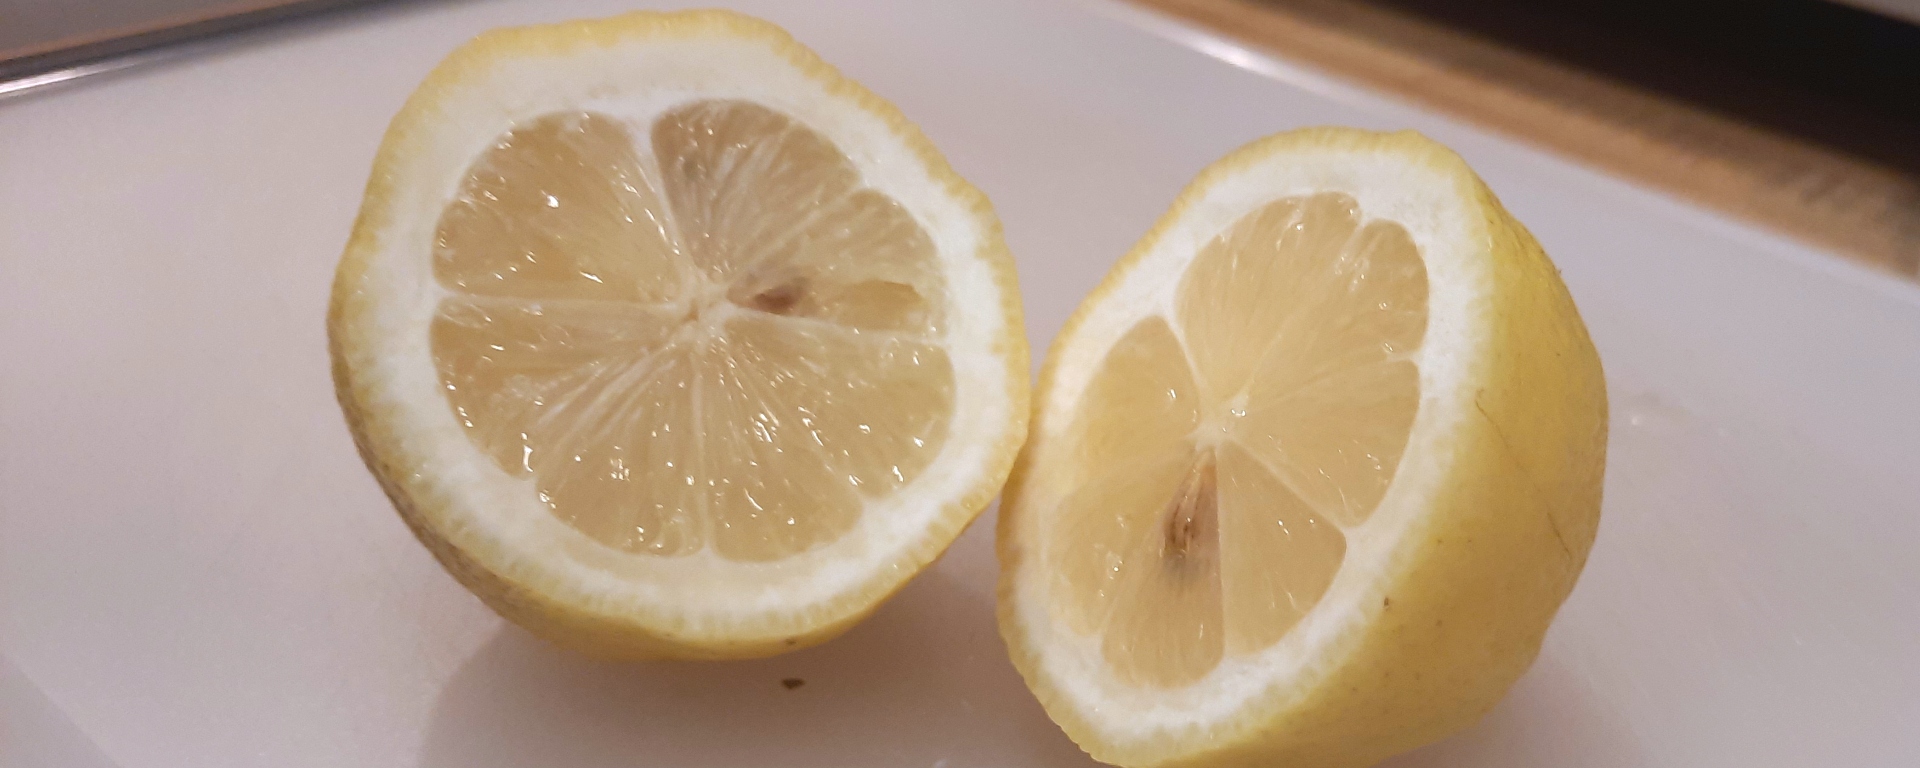 Are Lemons Healthy?